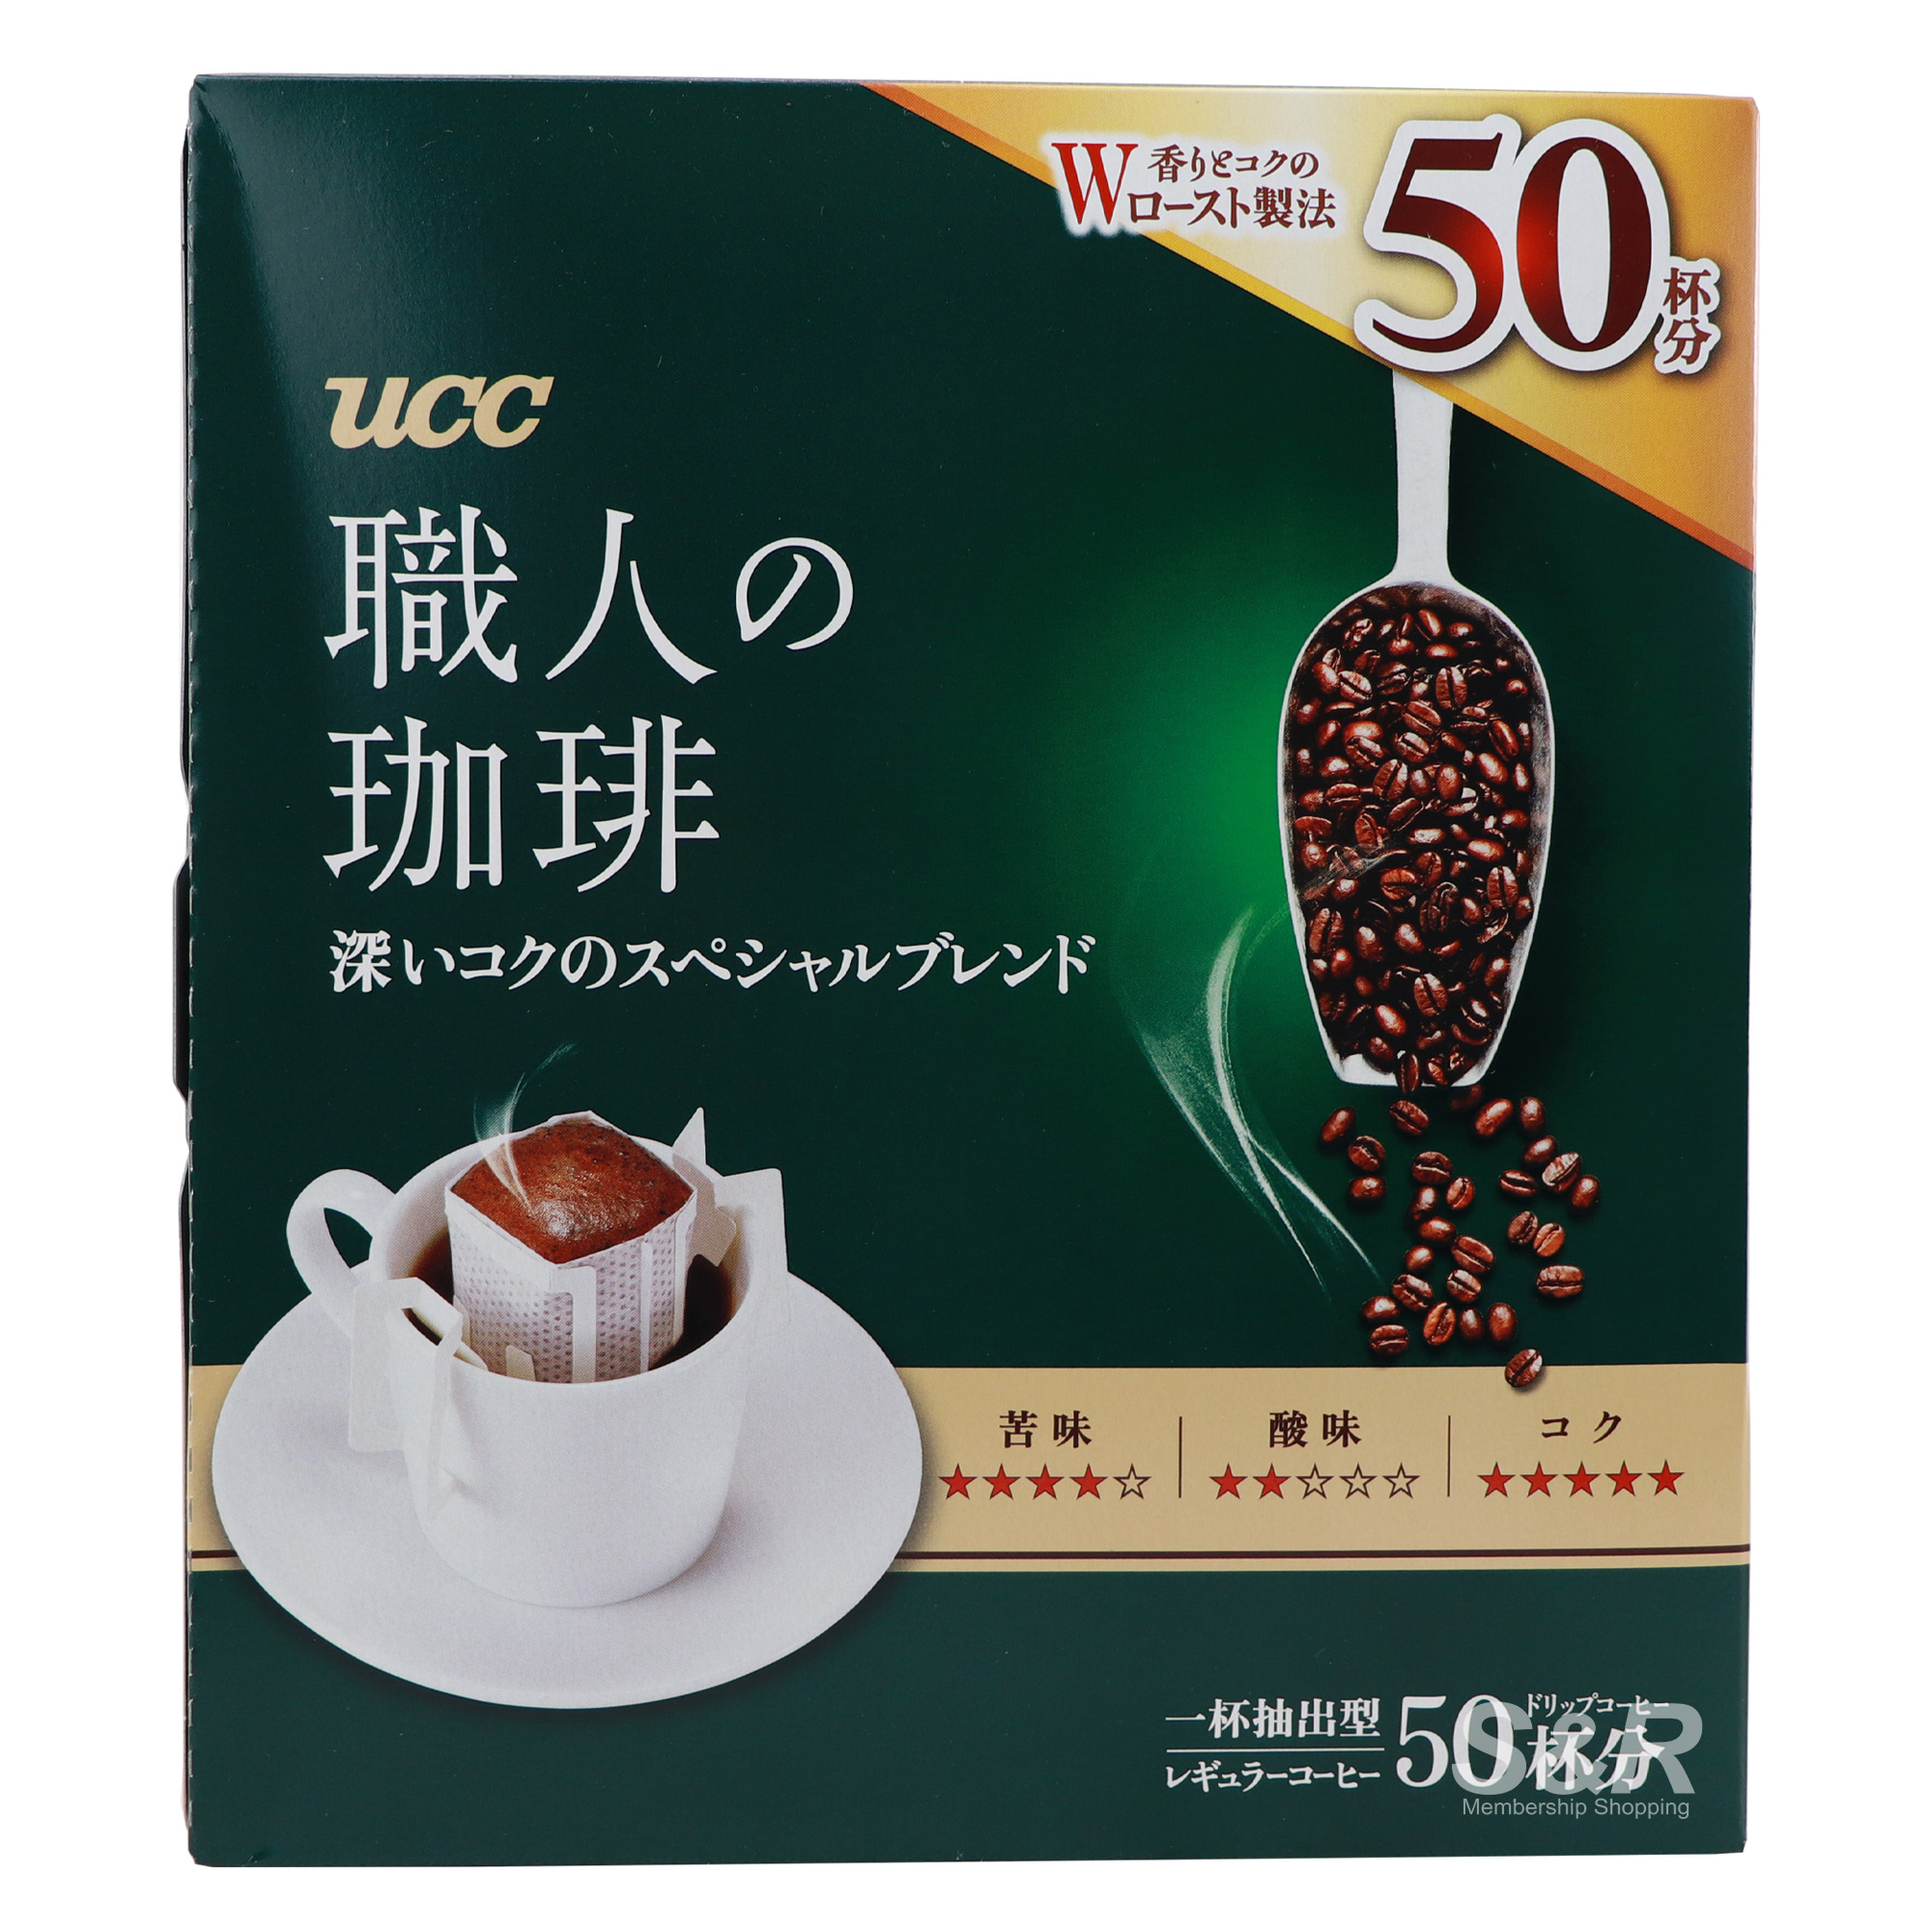 UCC Special Deep Rich Blend Coffee 50 sachets